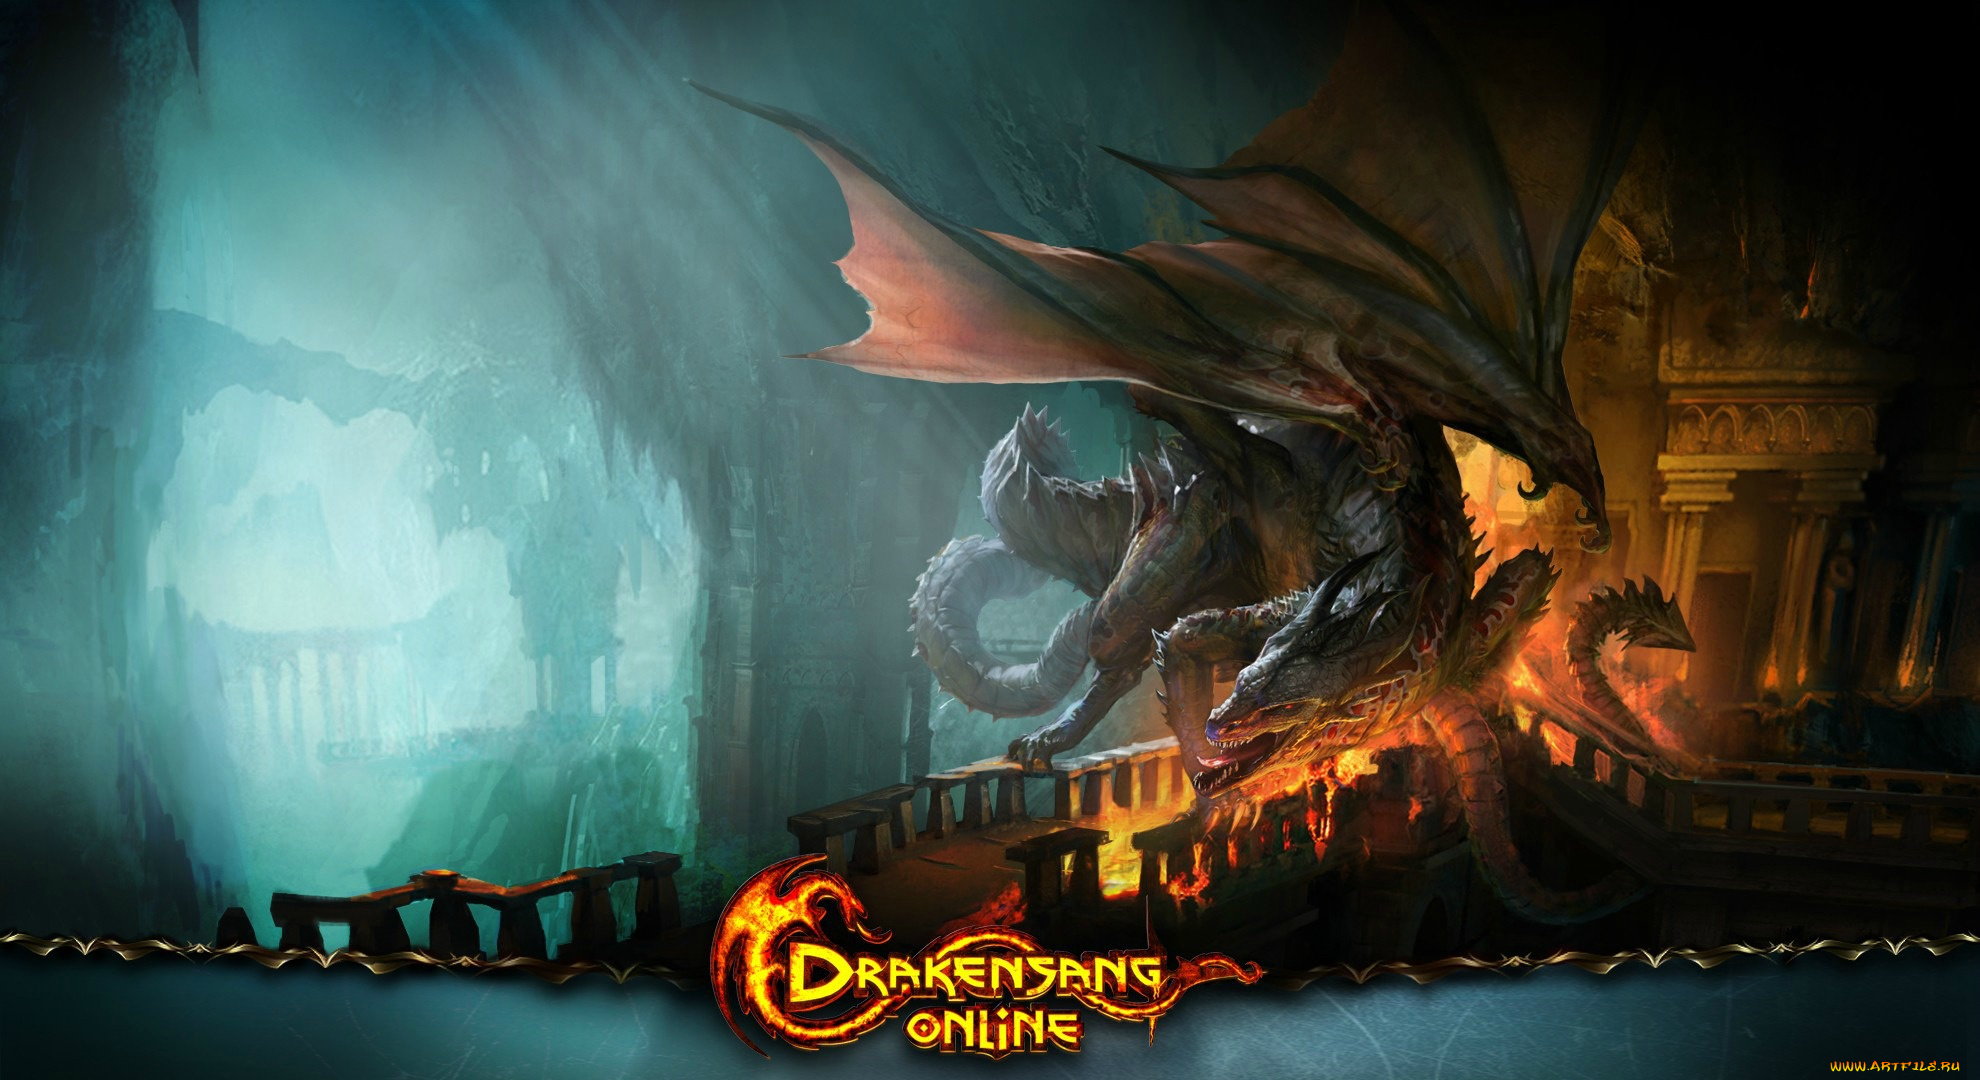 drakensang, видео, игры, online, замок, дракон